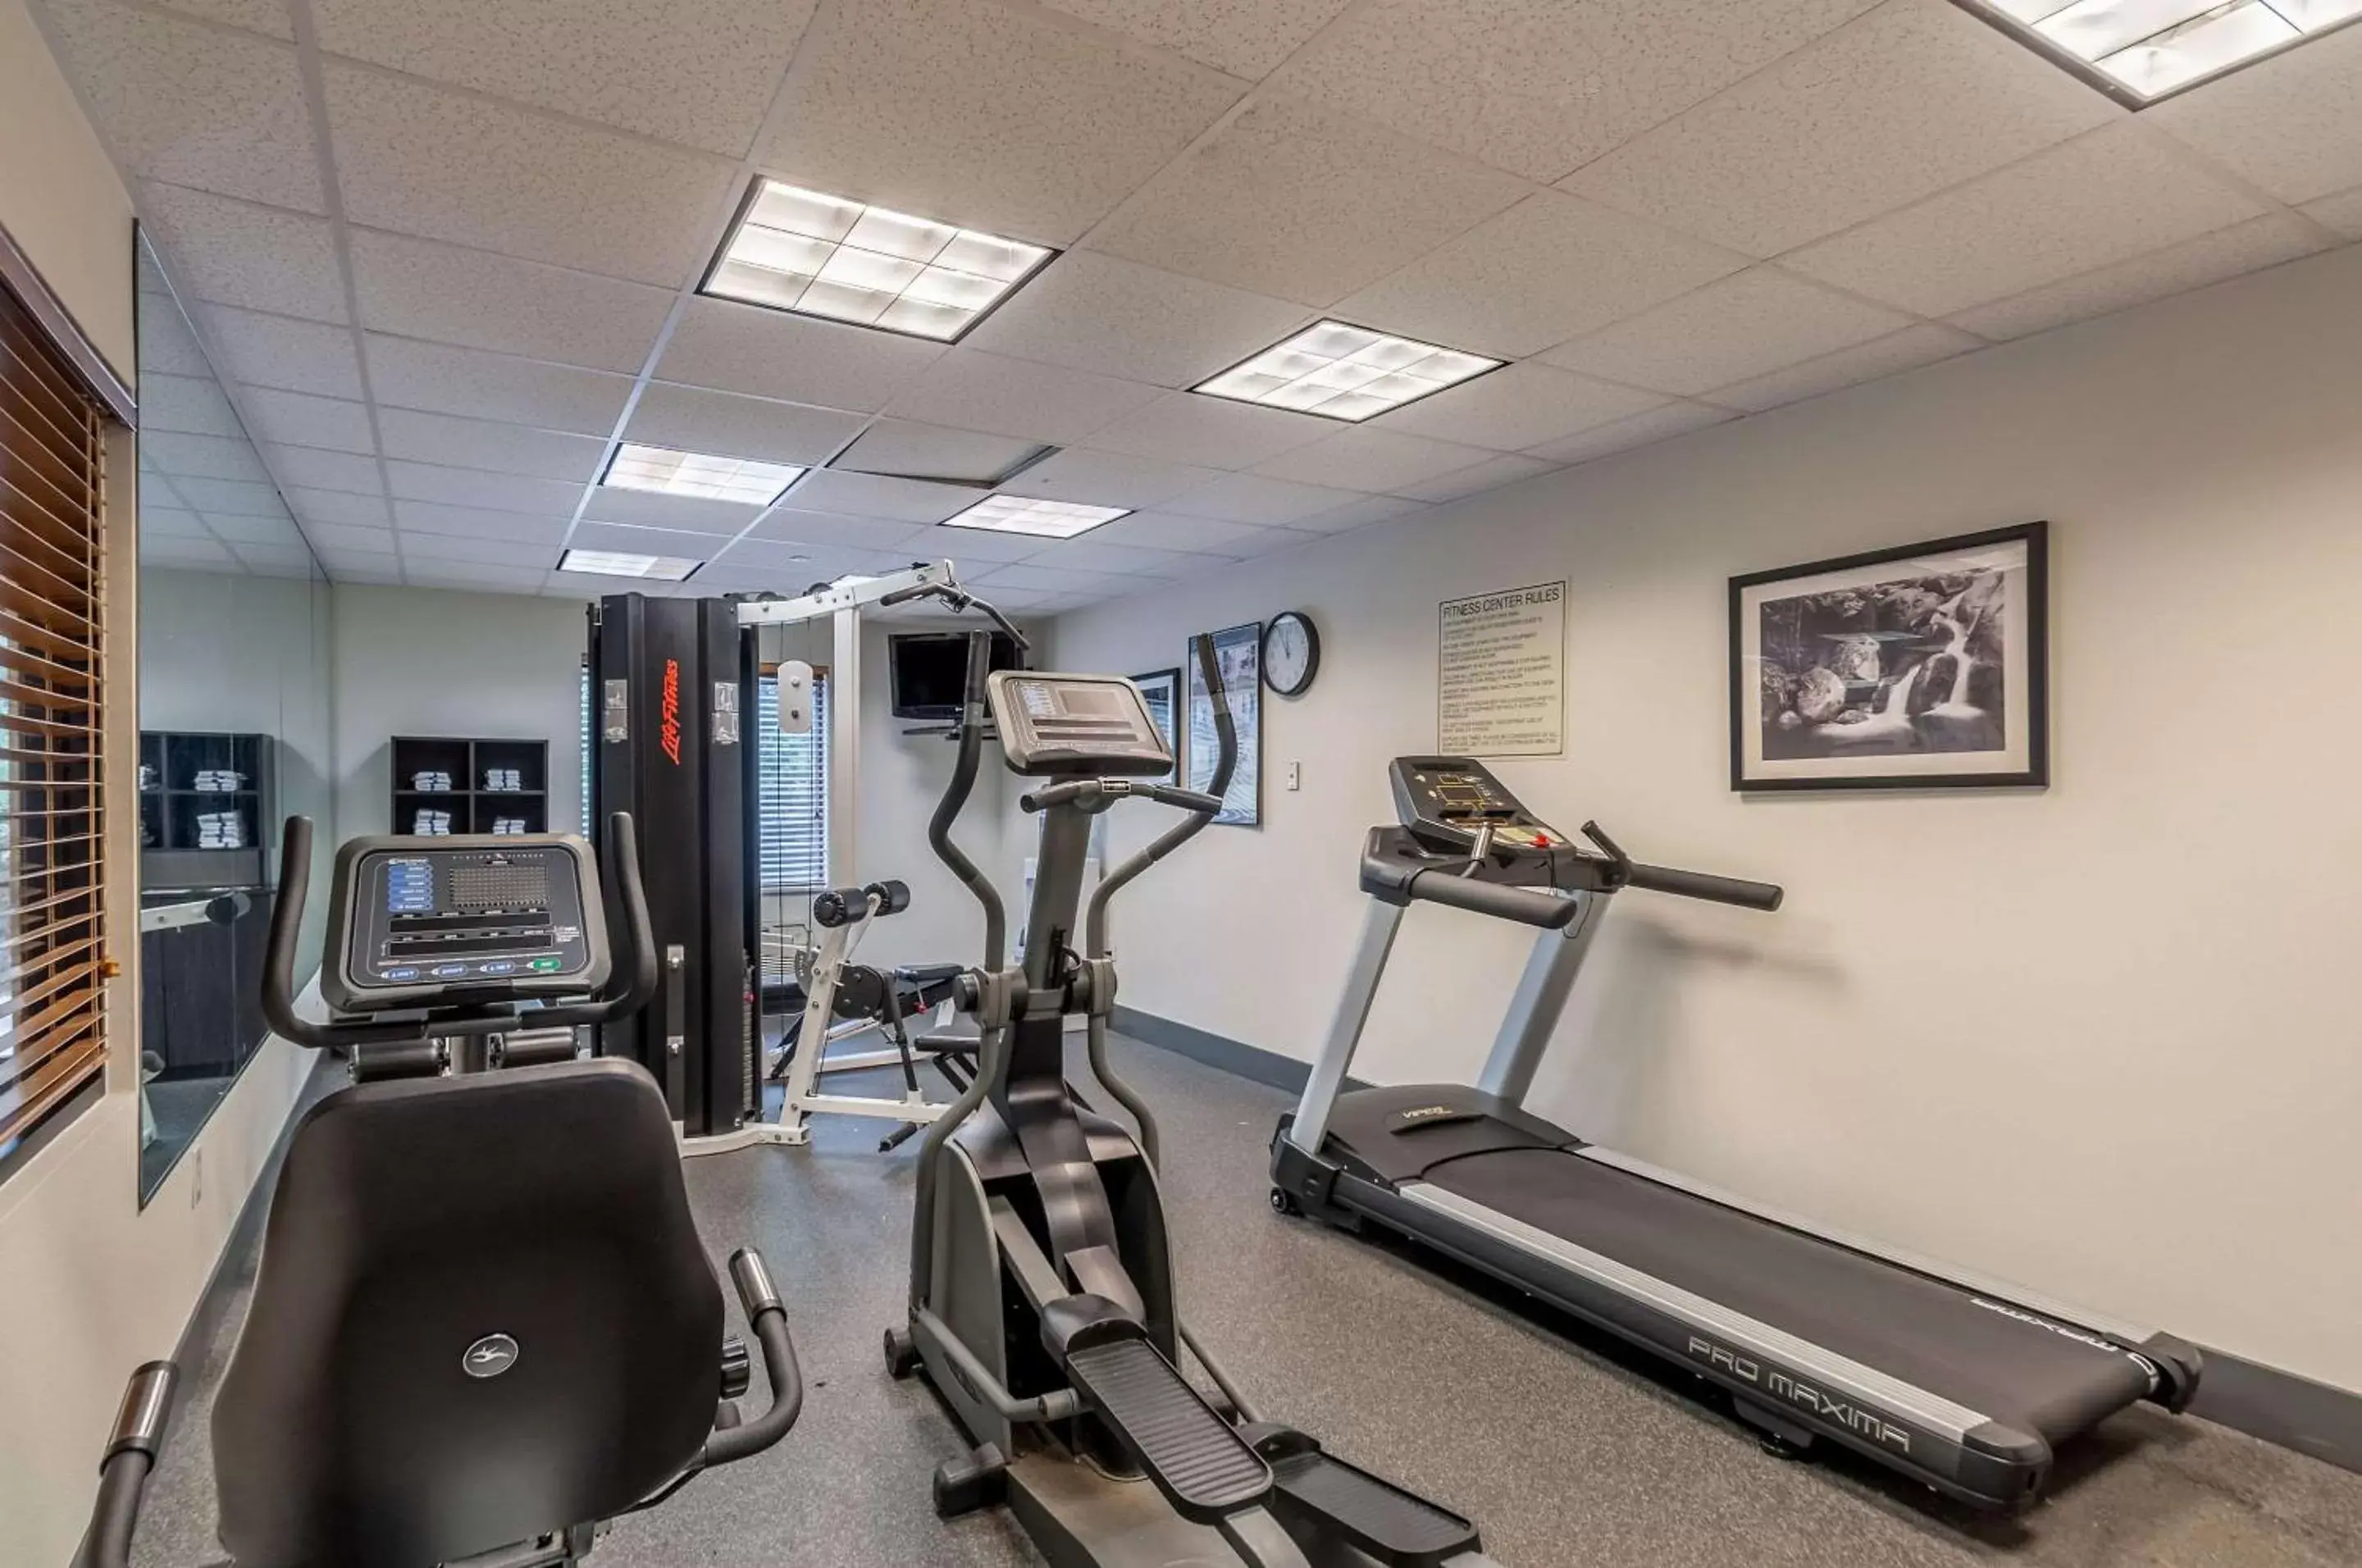 Fitness centre/facilities, Fitness Center/Facilities in Sleep Inn & Suites Harrisonburg near University